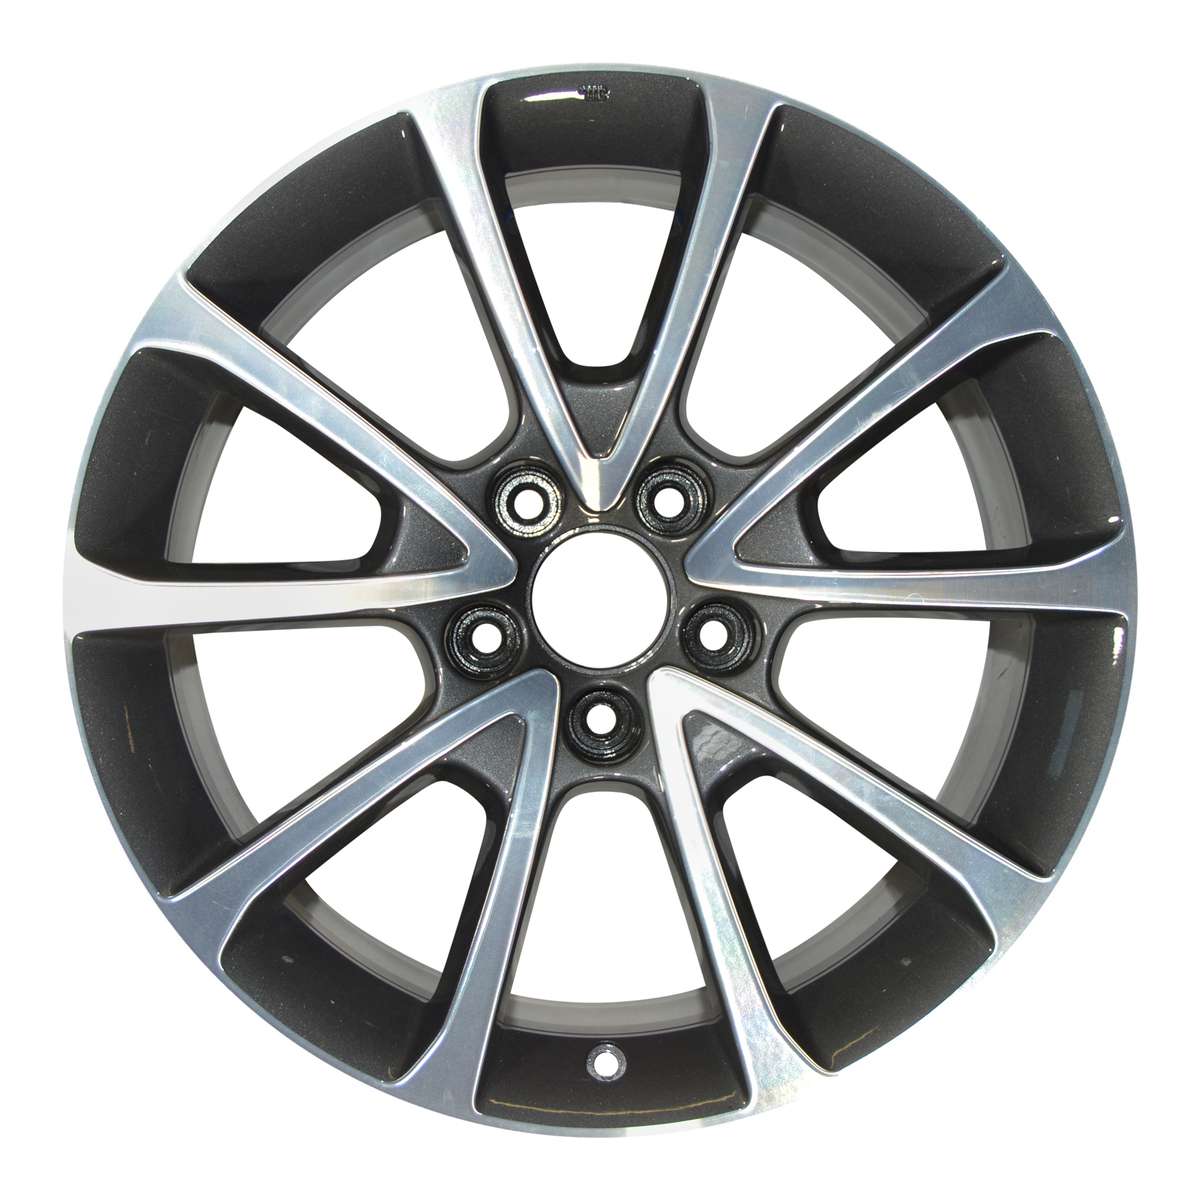 2016 Acura TLX New 18" Replacement Wheel Rim RW71827MC